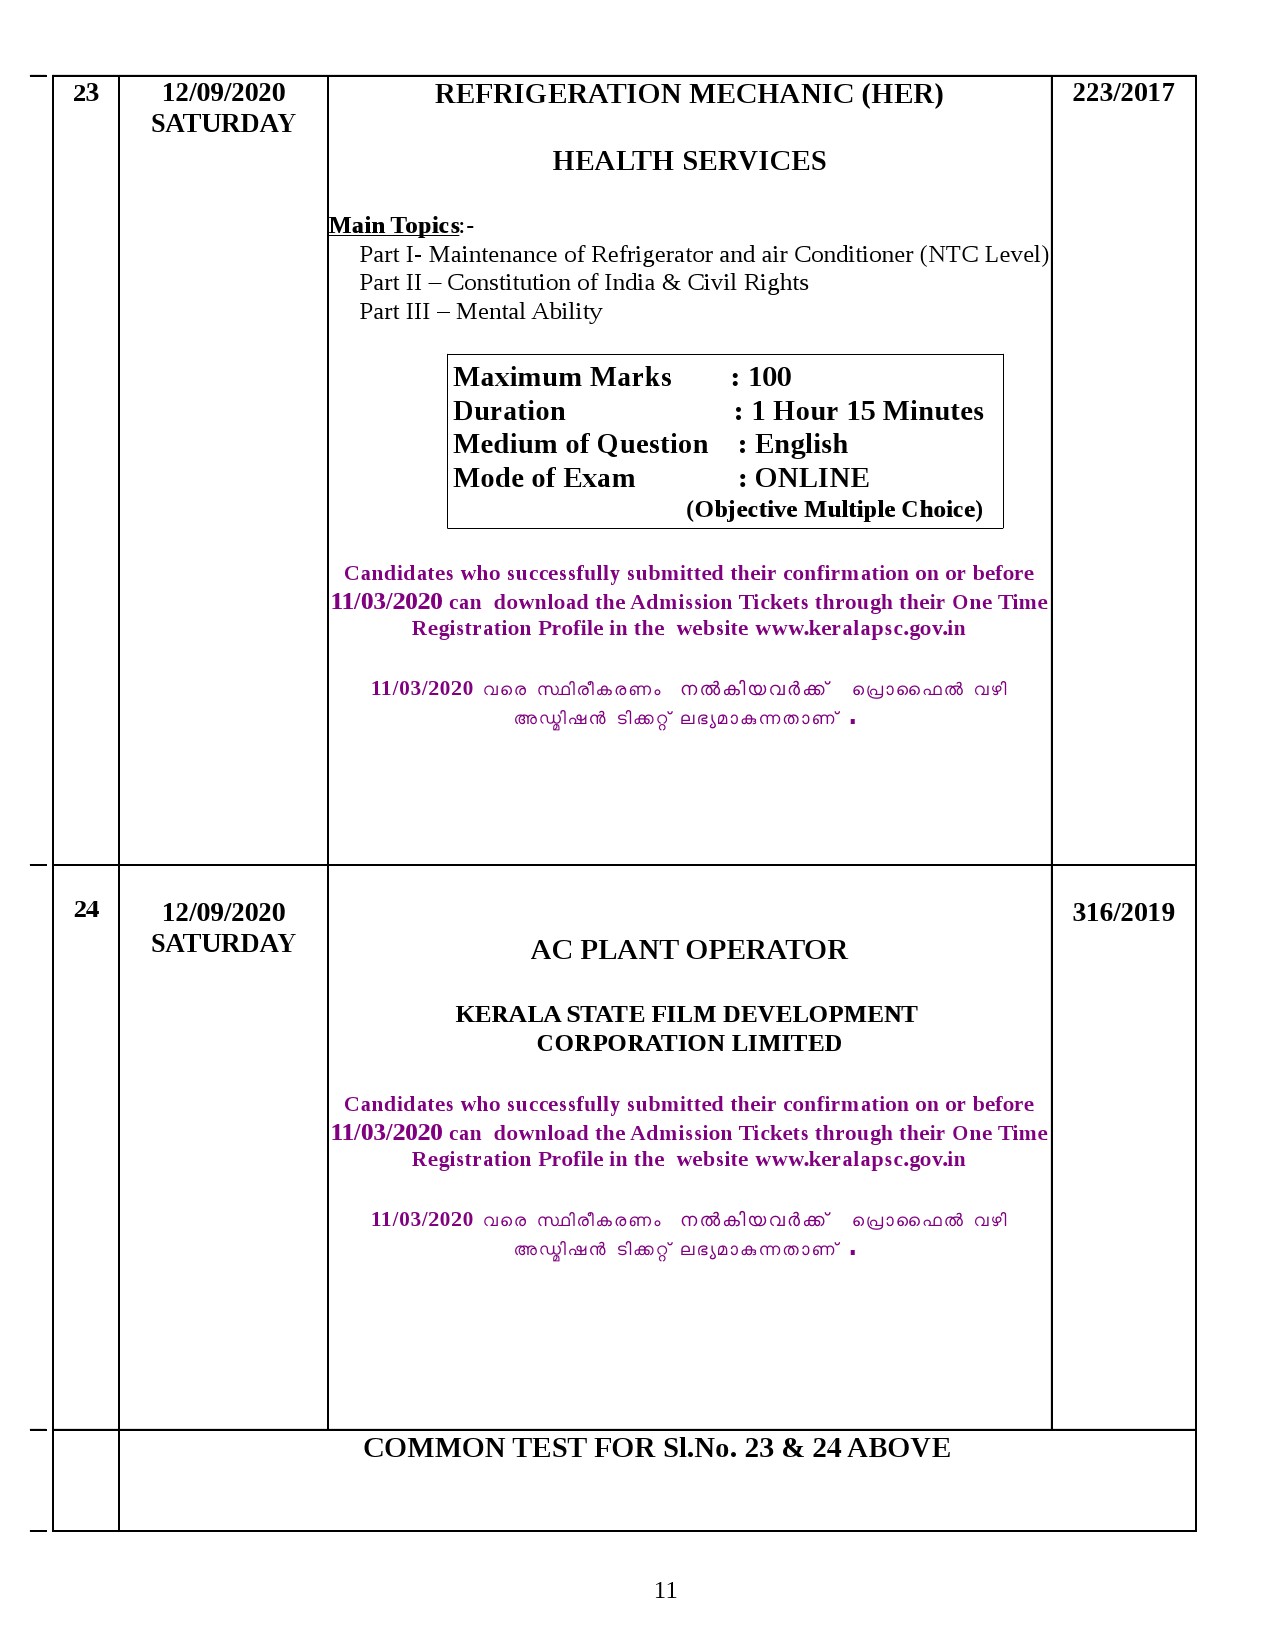 Kerala PSC Exam Calendar September 2020 - Notification Image 11